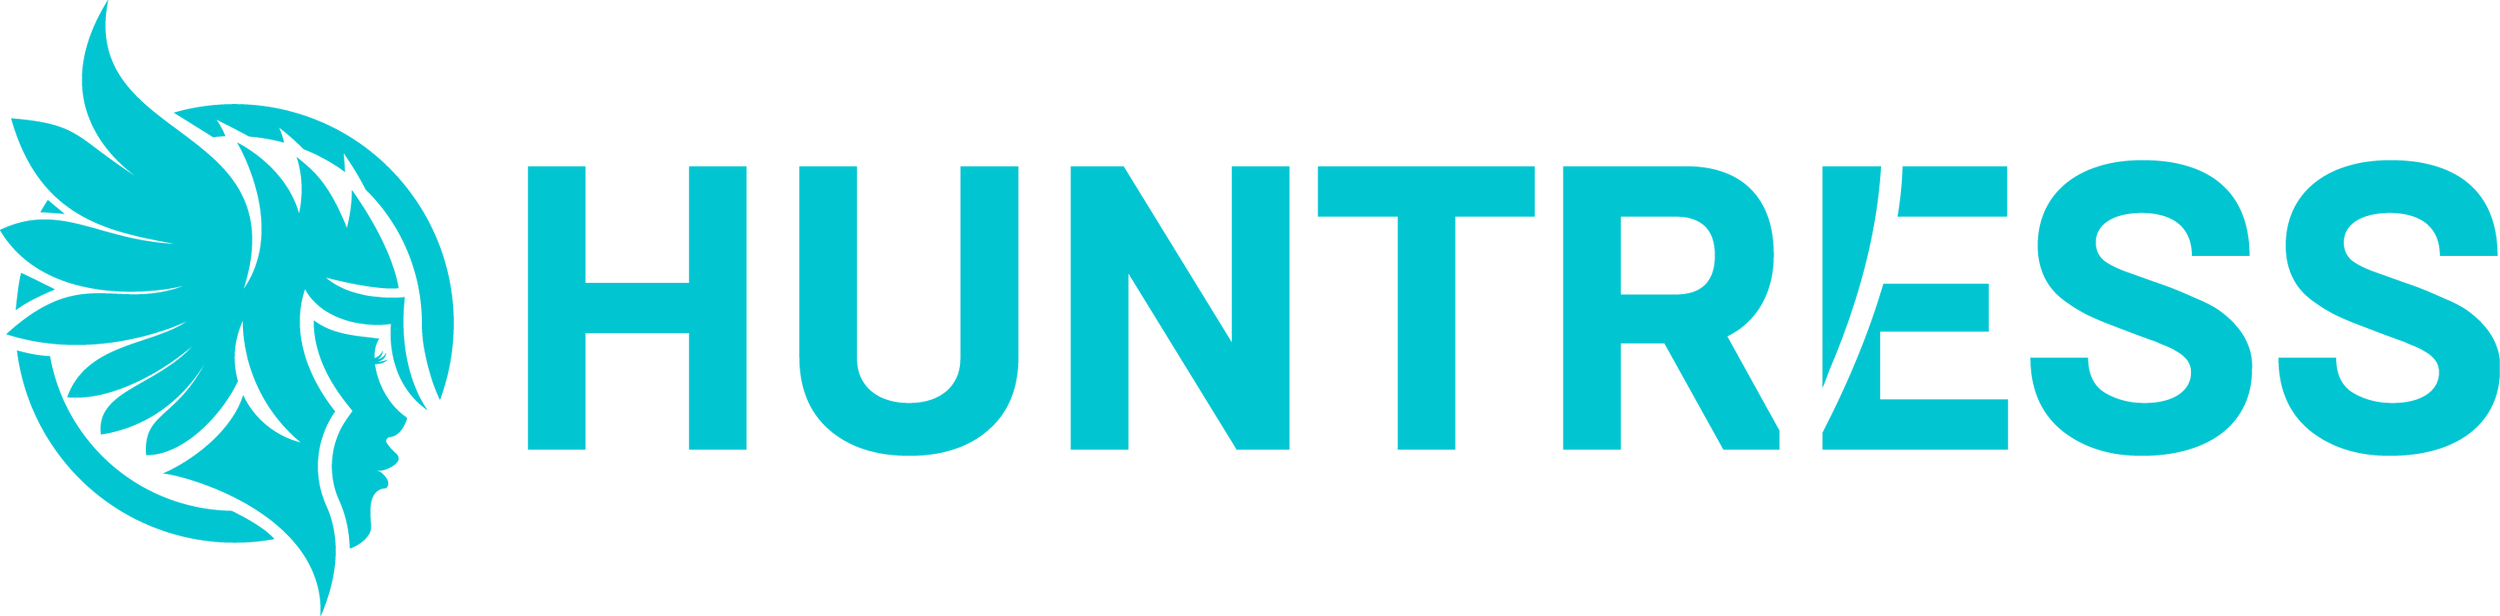 Huntress Logo - Wide Teal.png